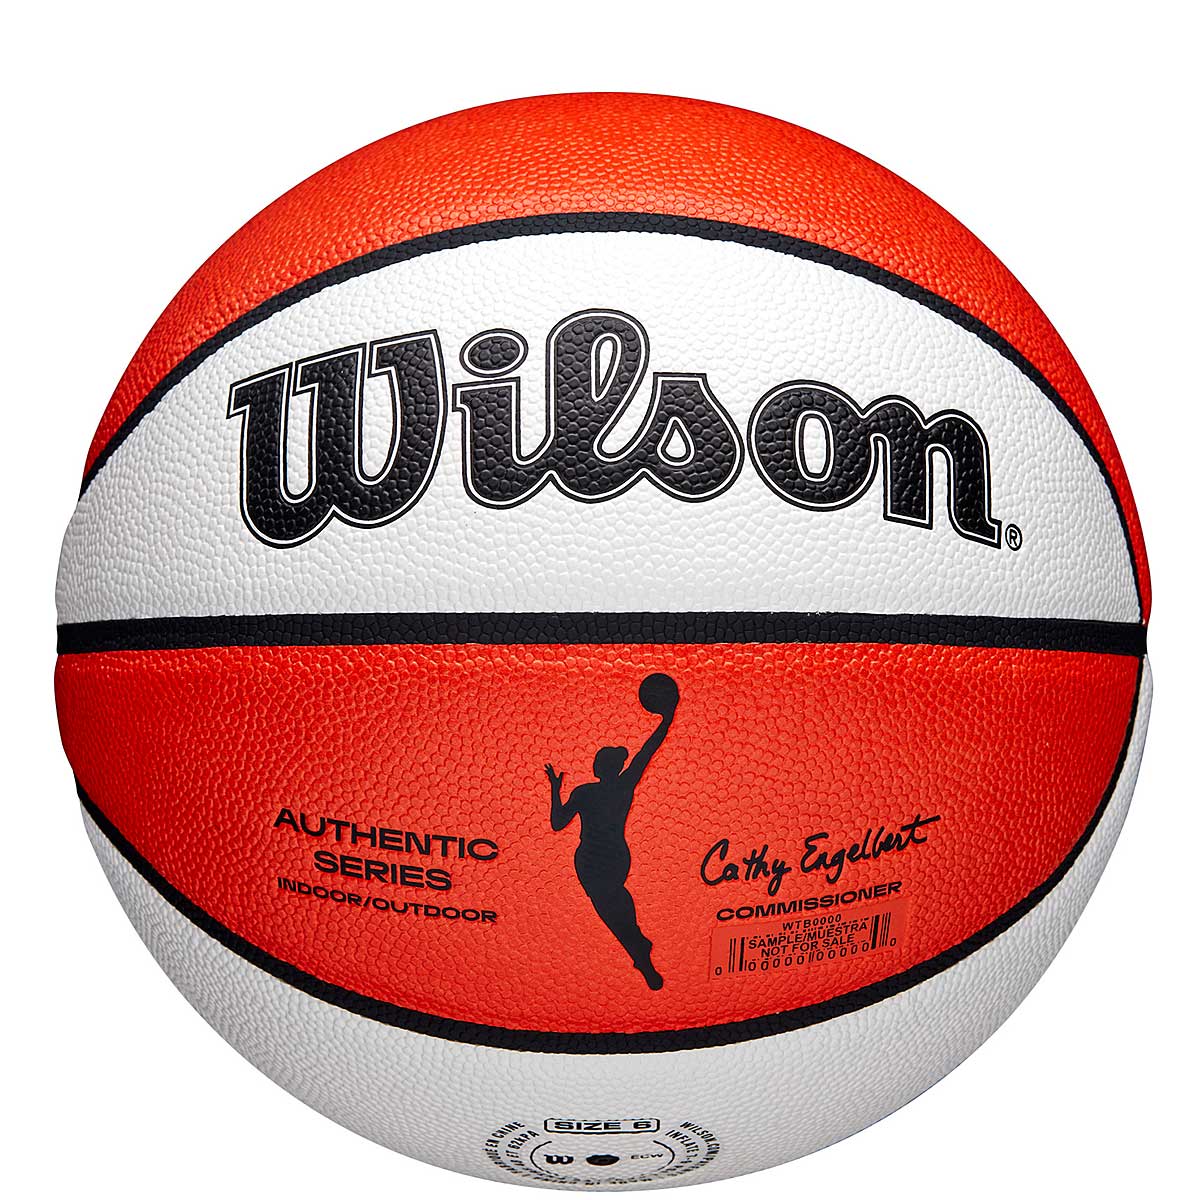 Image of Wilson Wnba Authentic Indoor Outdoor Basketball, Orange/white